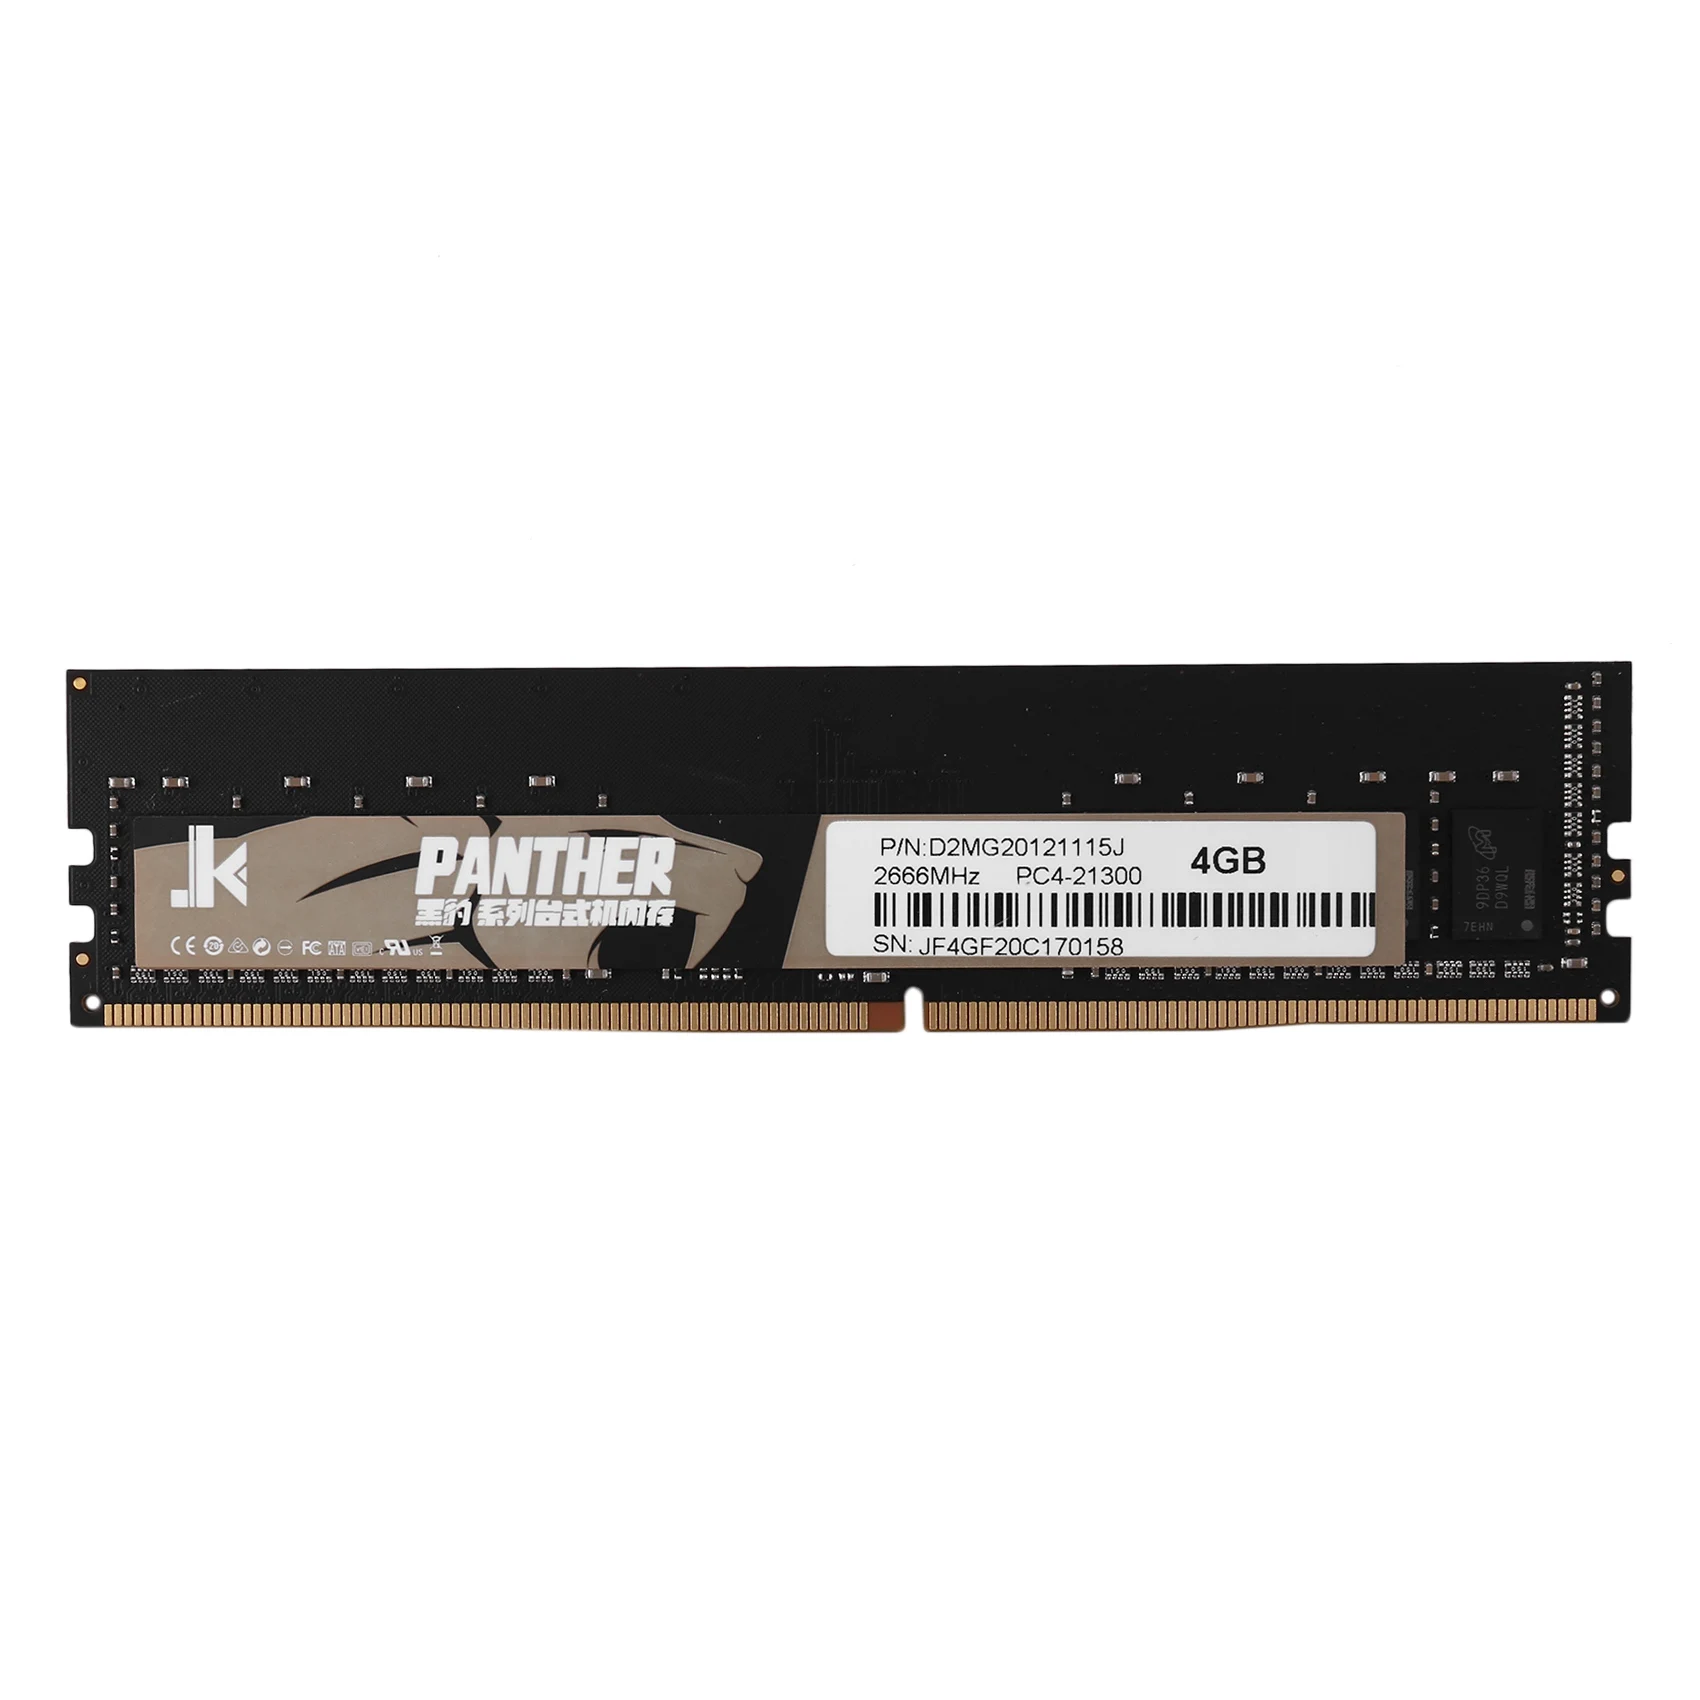 

JK Black Panther Black Panther DDR4 2666MHZ Memory Module, High-Performance Multi-Compatible Memory Module for Desktop(4GB)